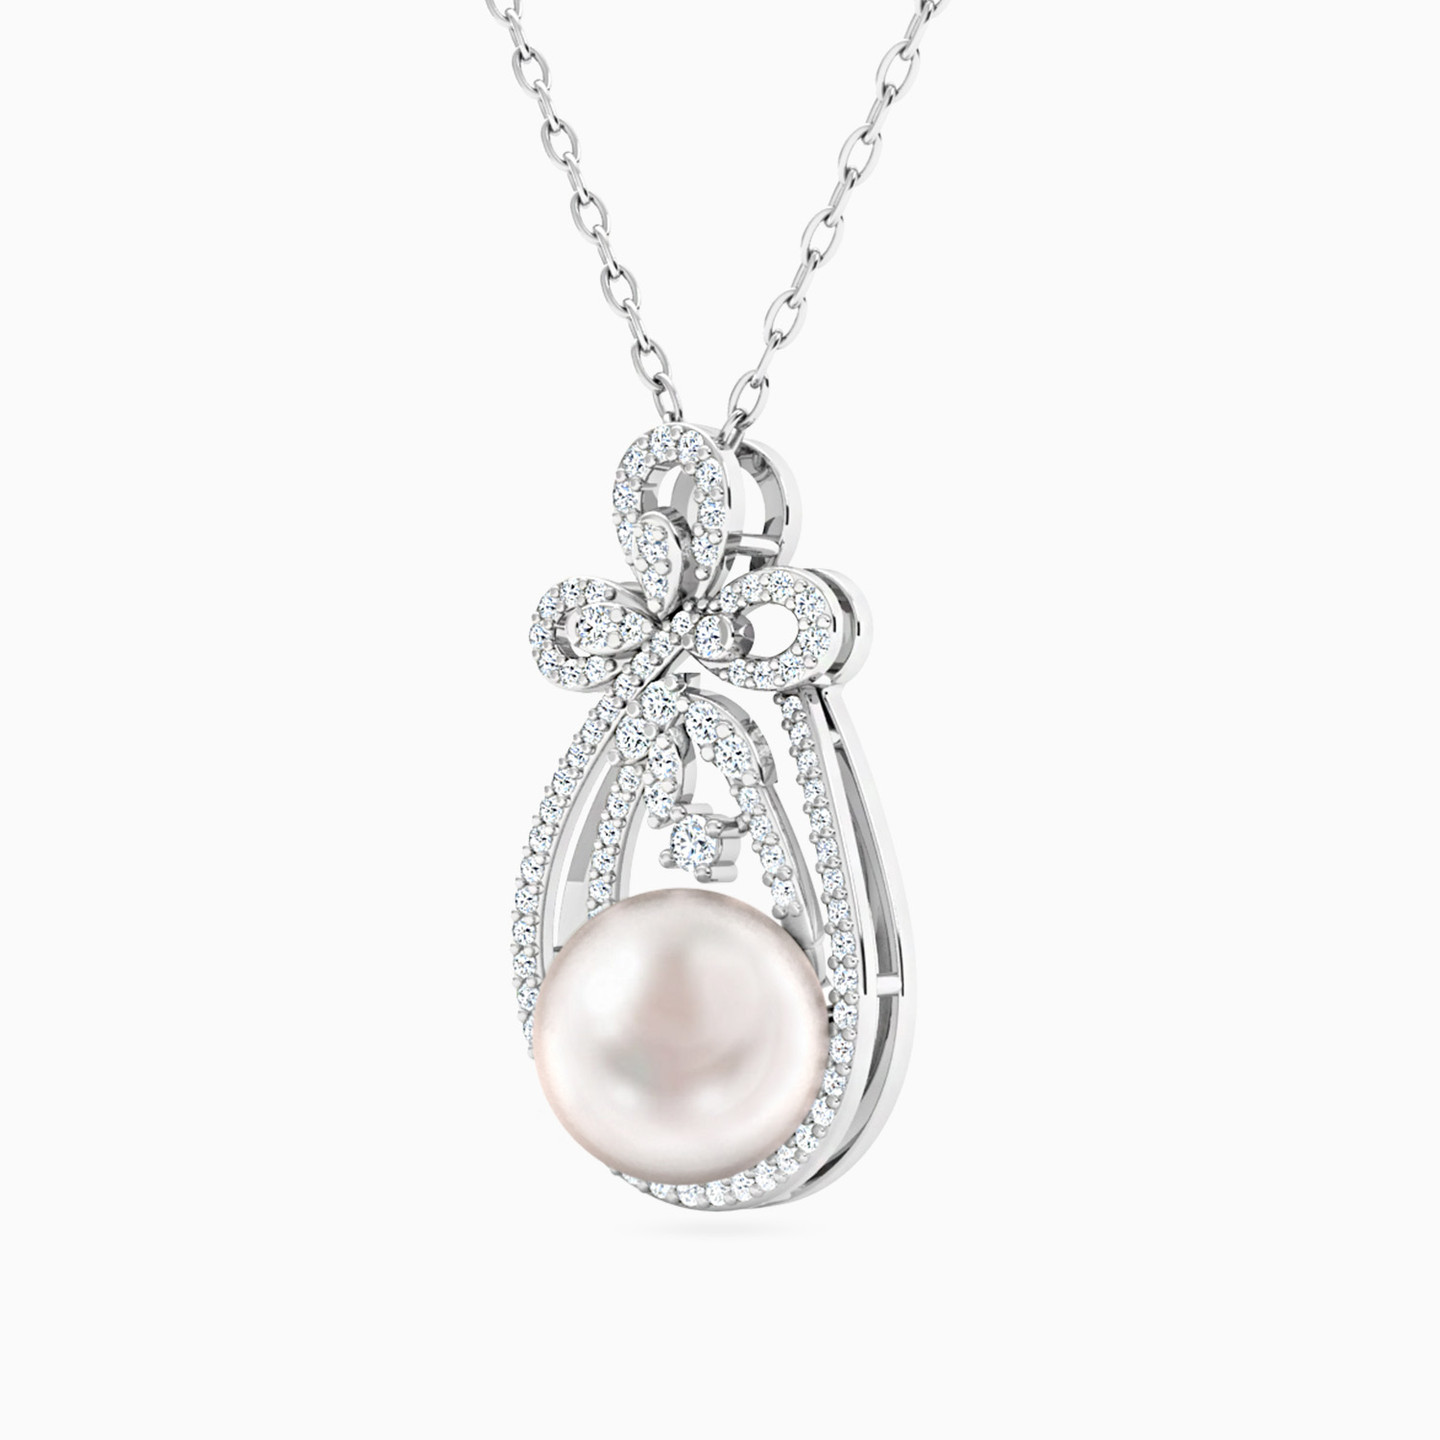 18K Gold Diamond & Pearls Pendant Necklace - 2